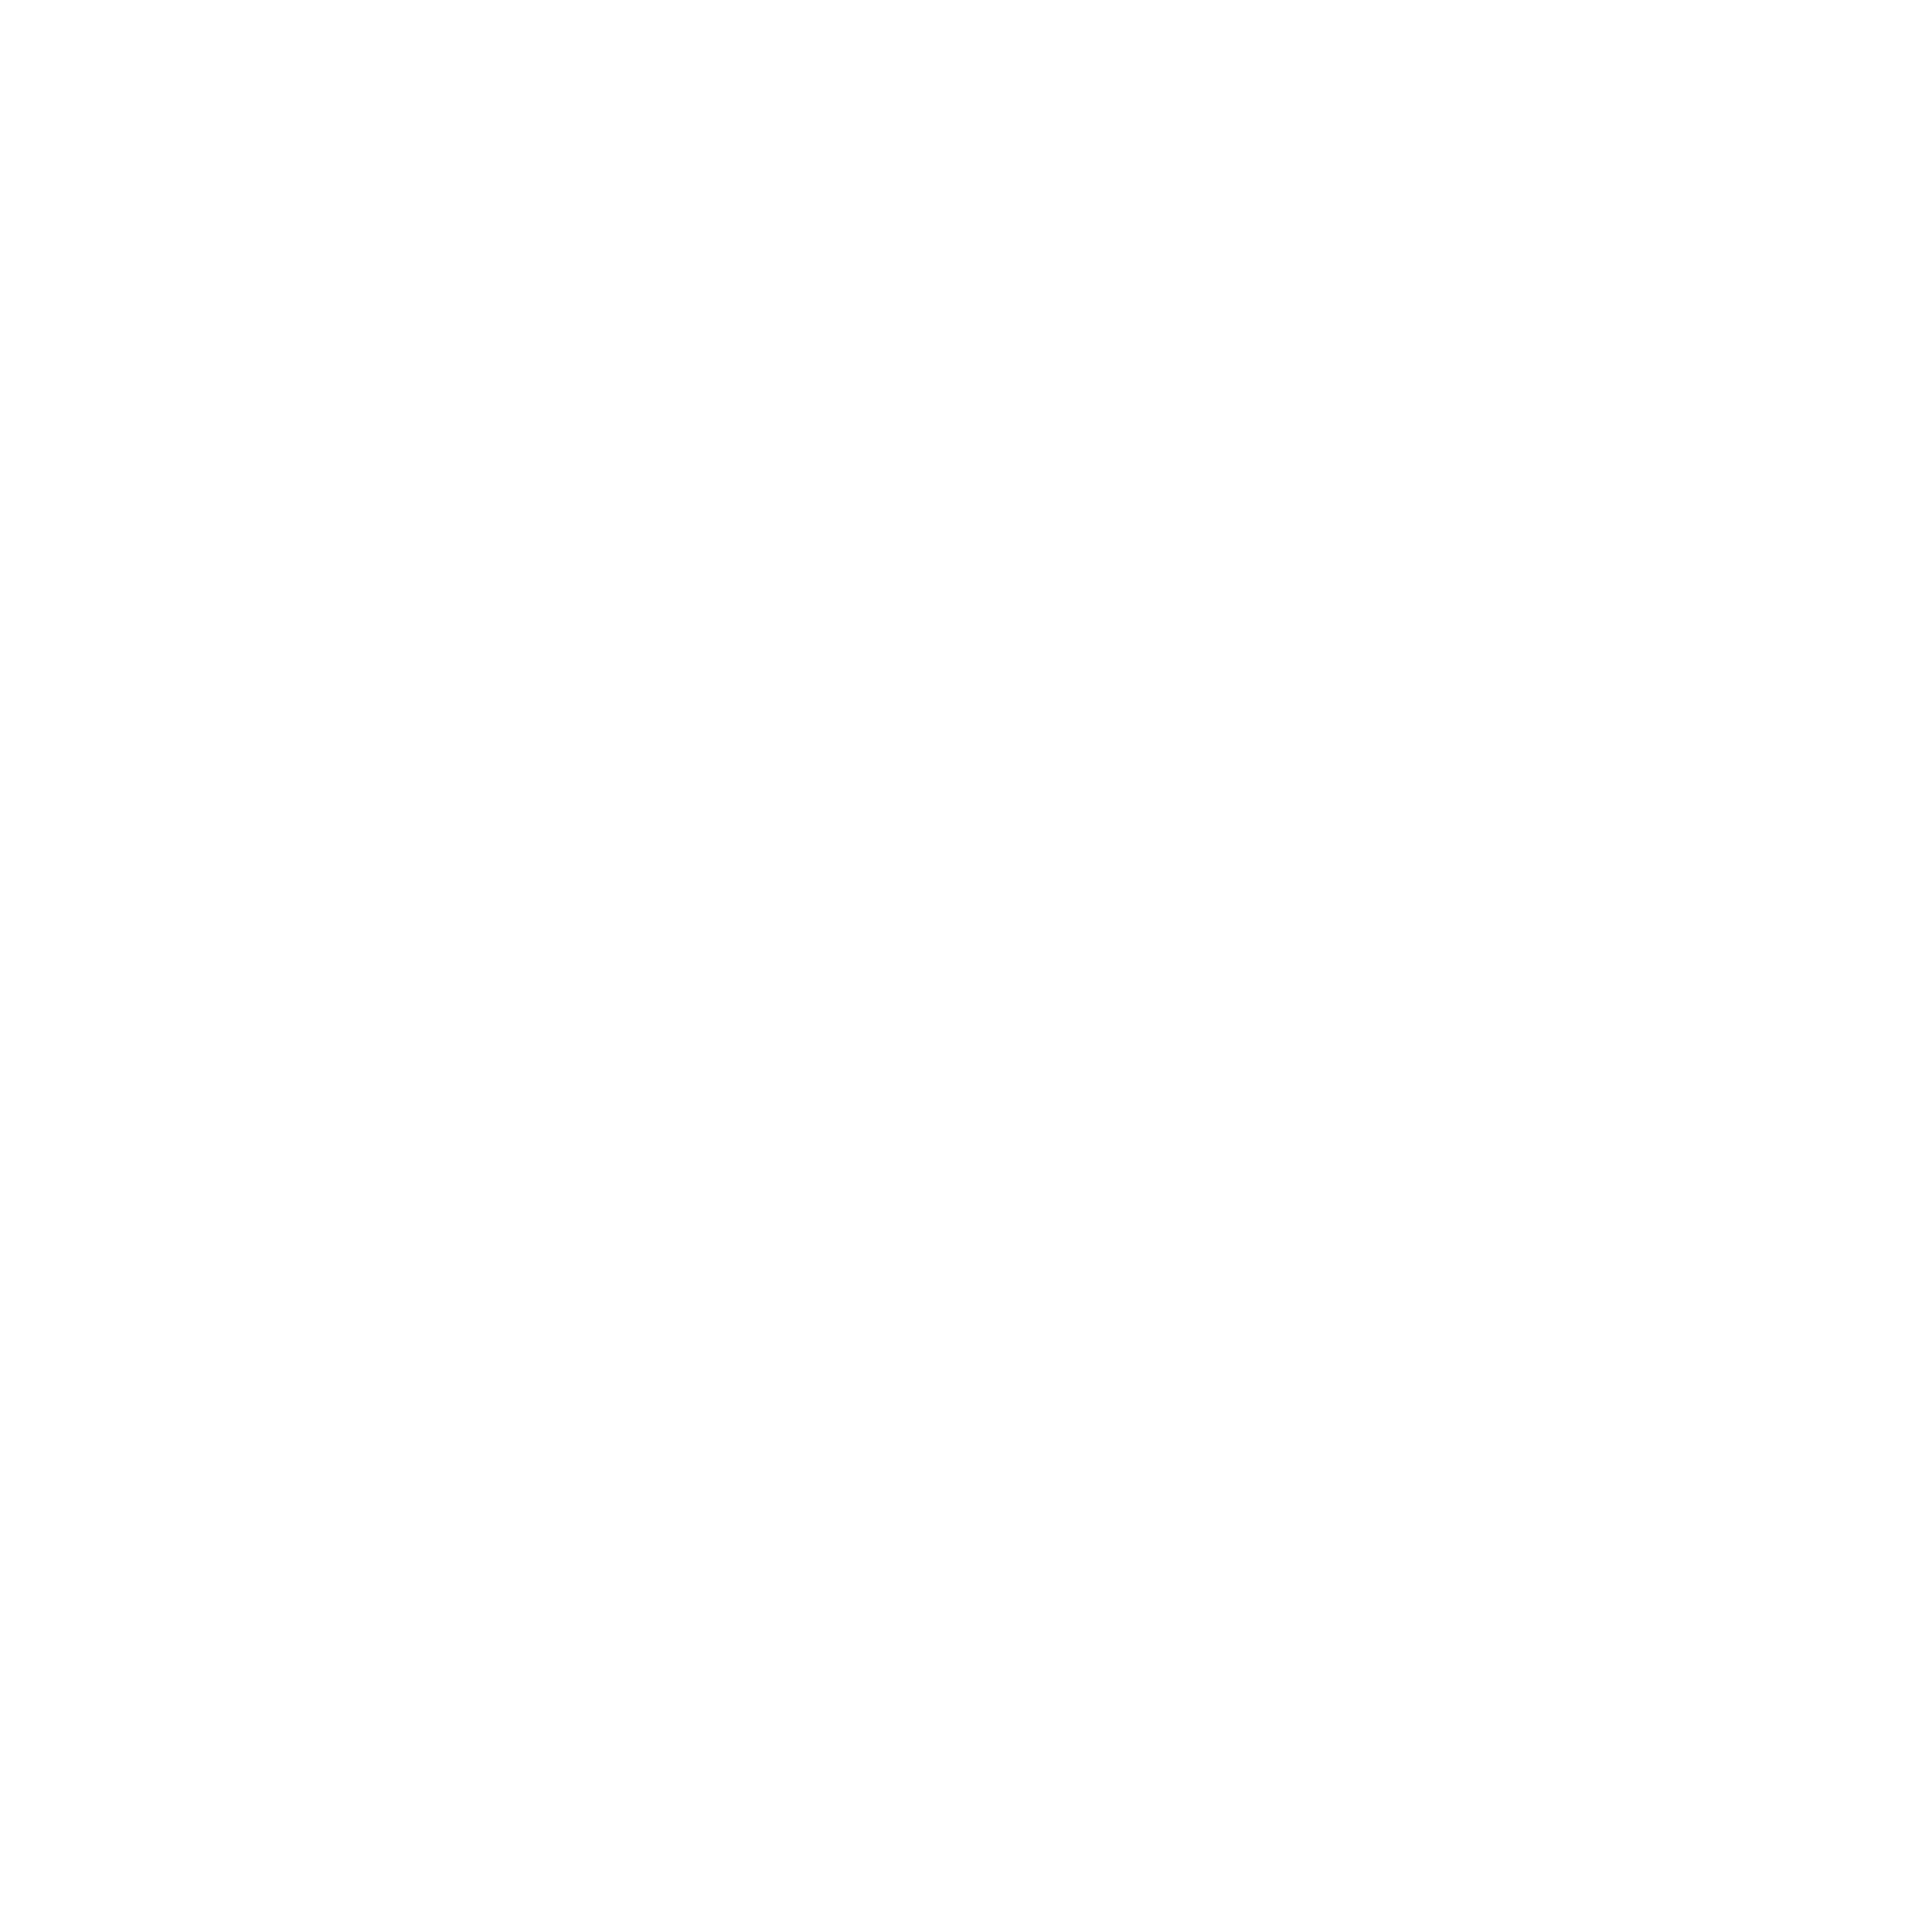 Hart-logos-black-trans8.png